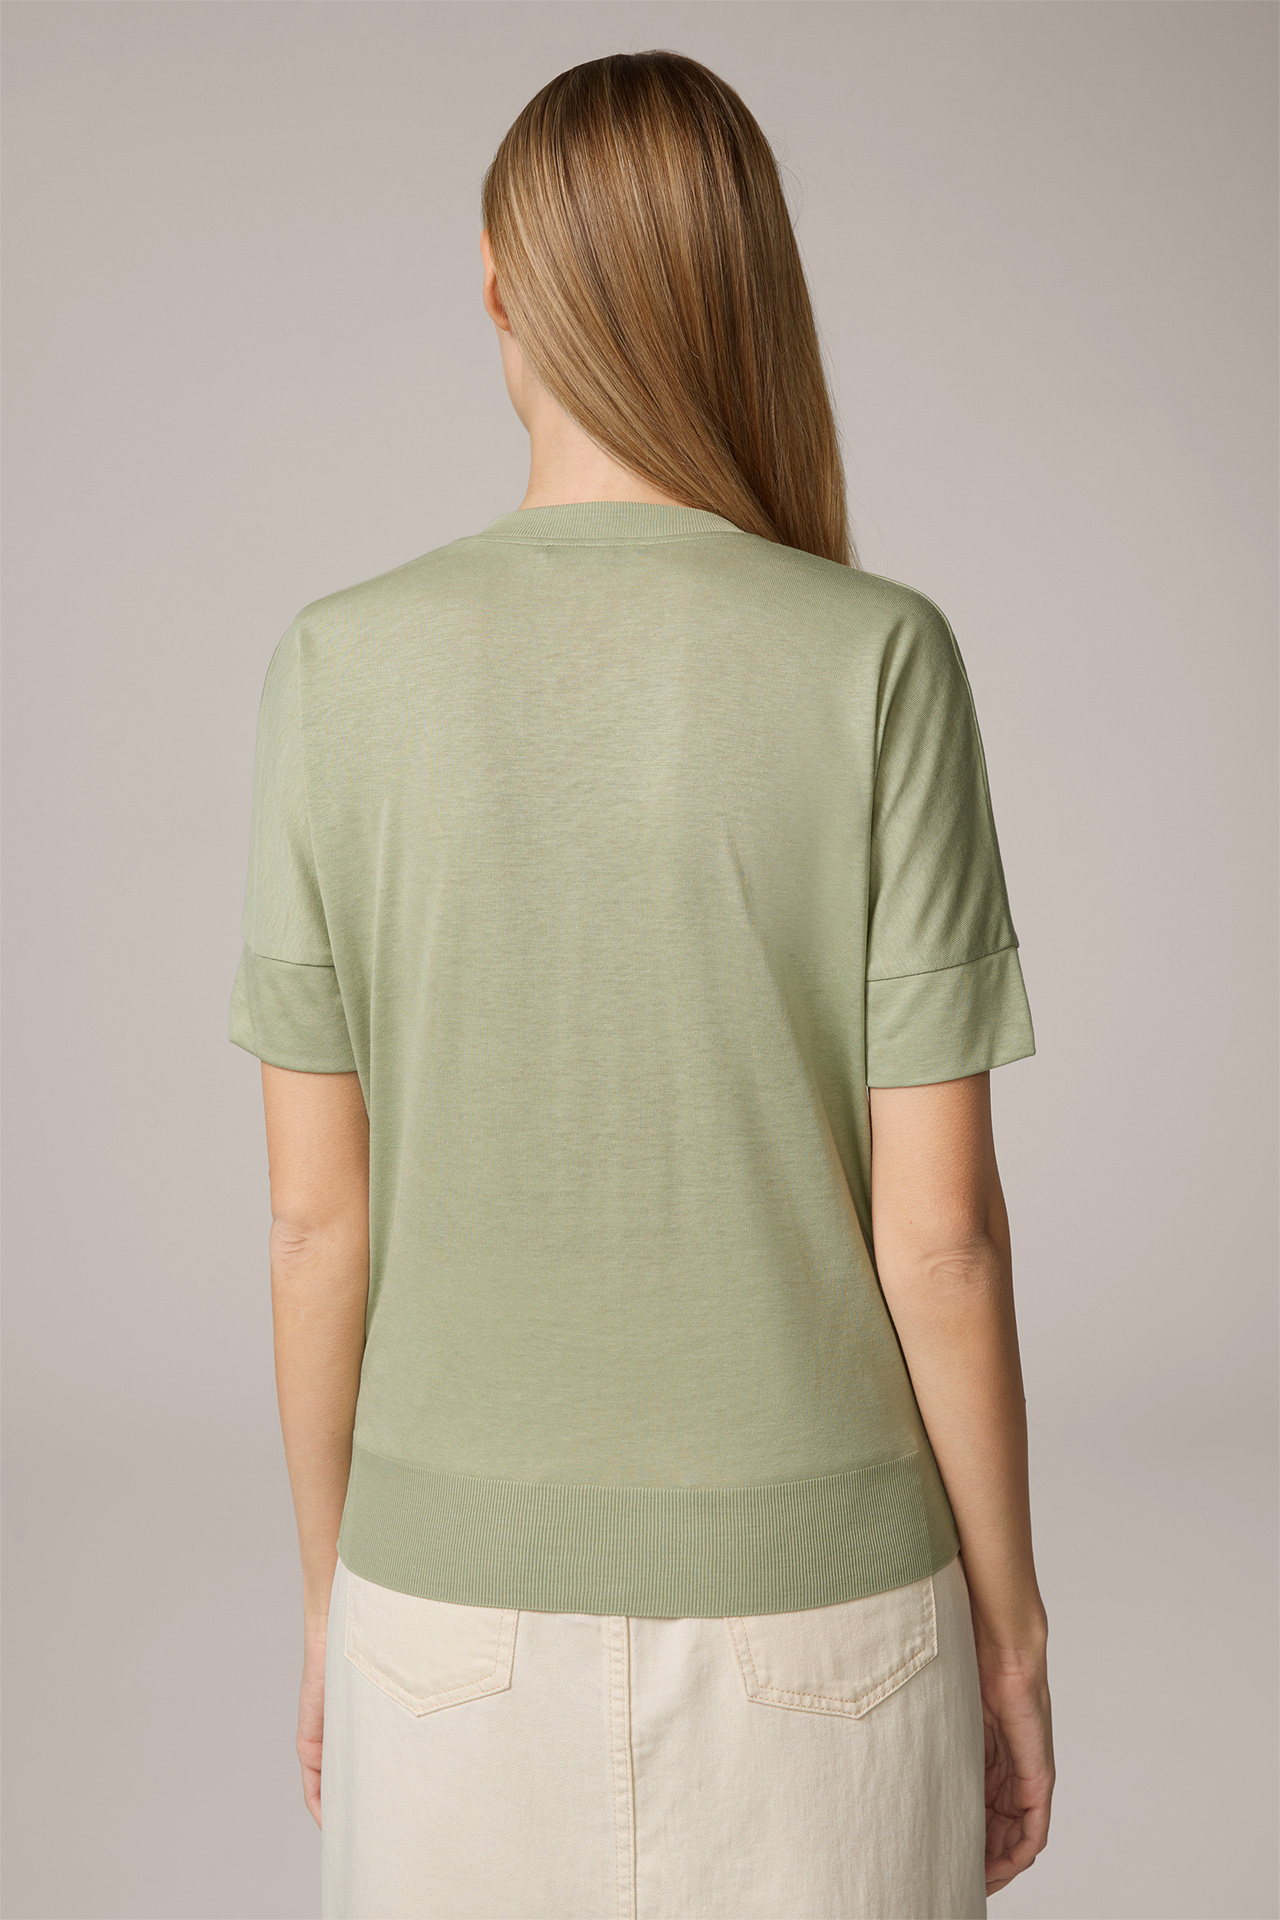 Tencel Cotton V-Neck Shirt in Sage